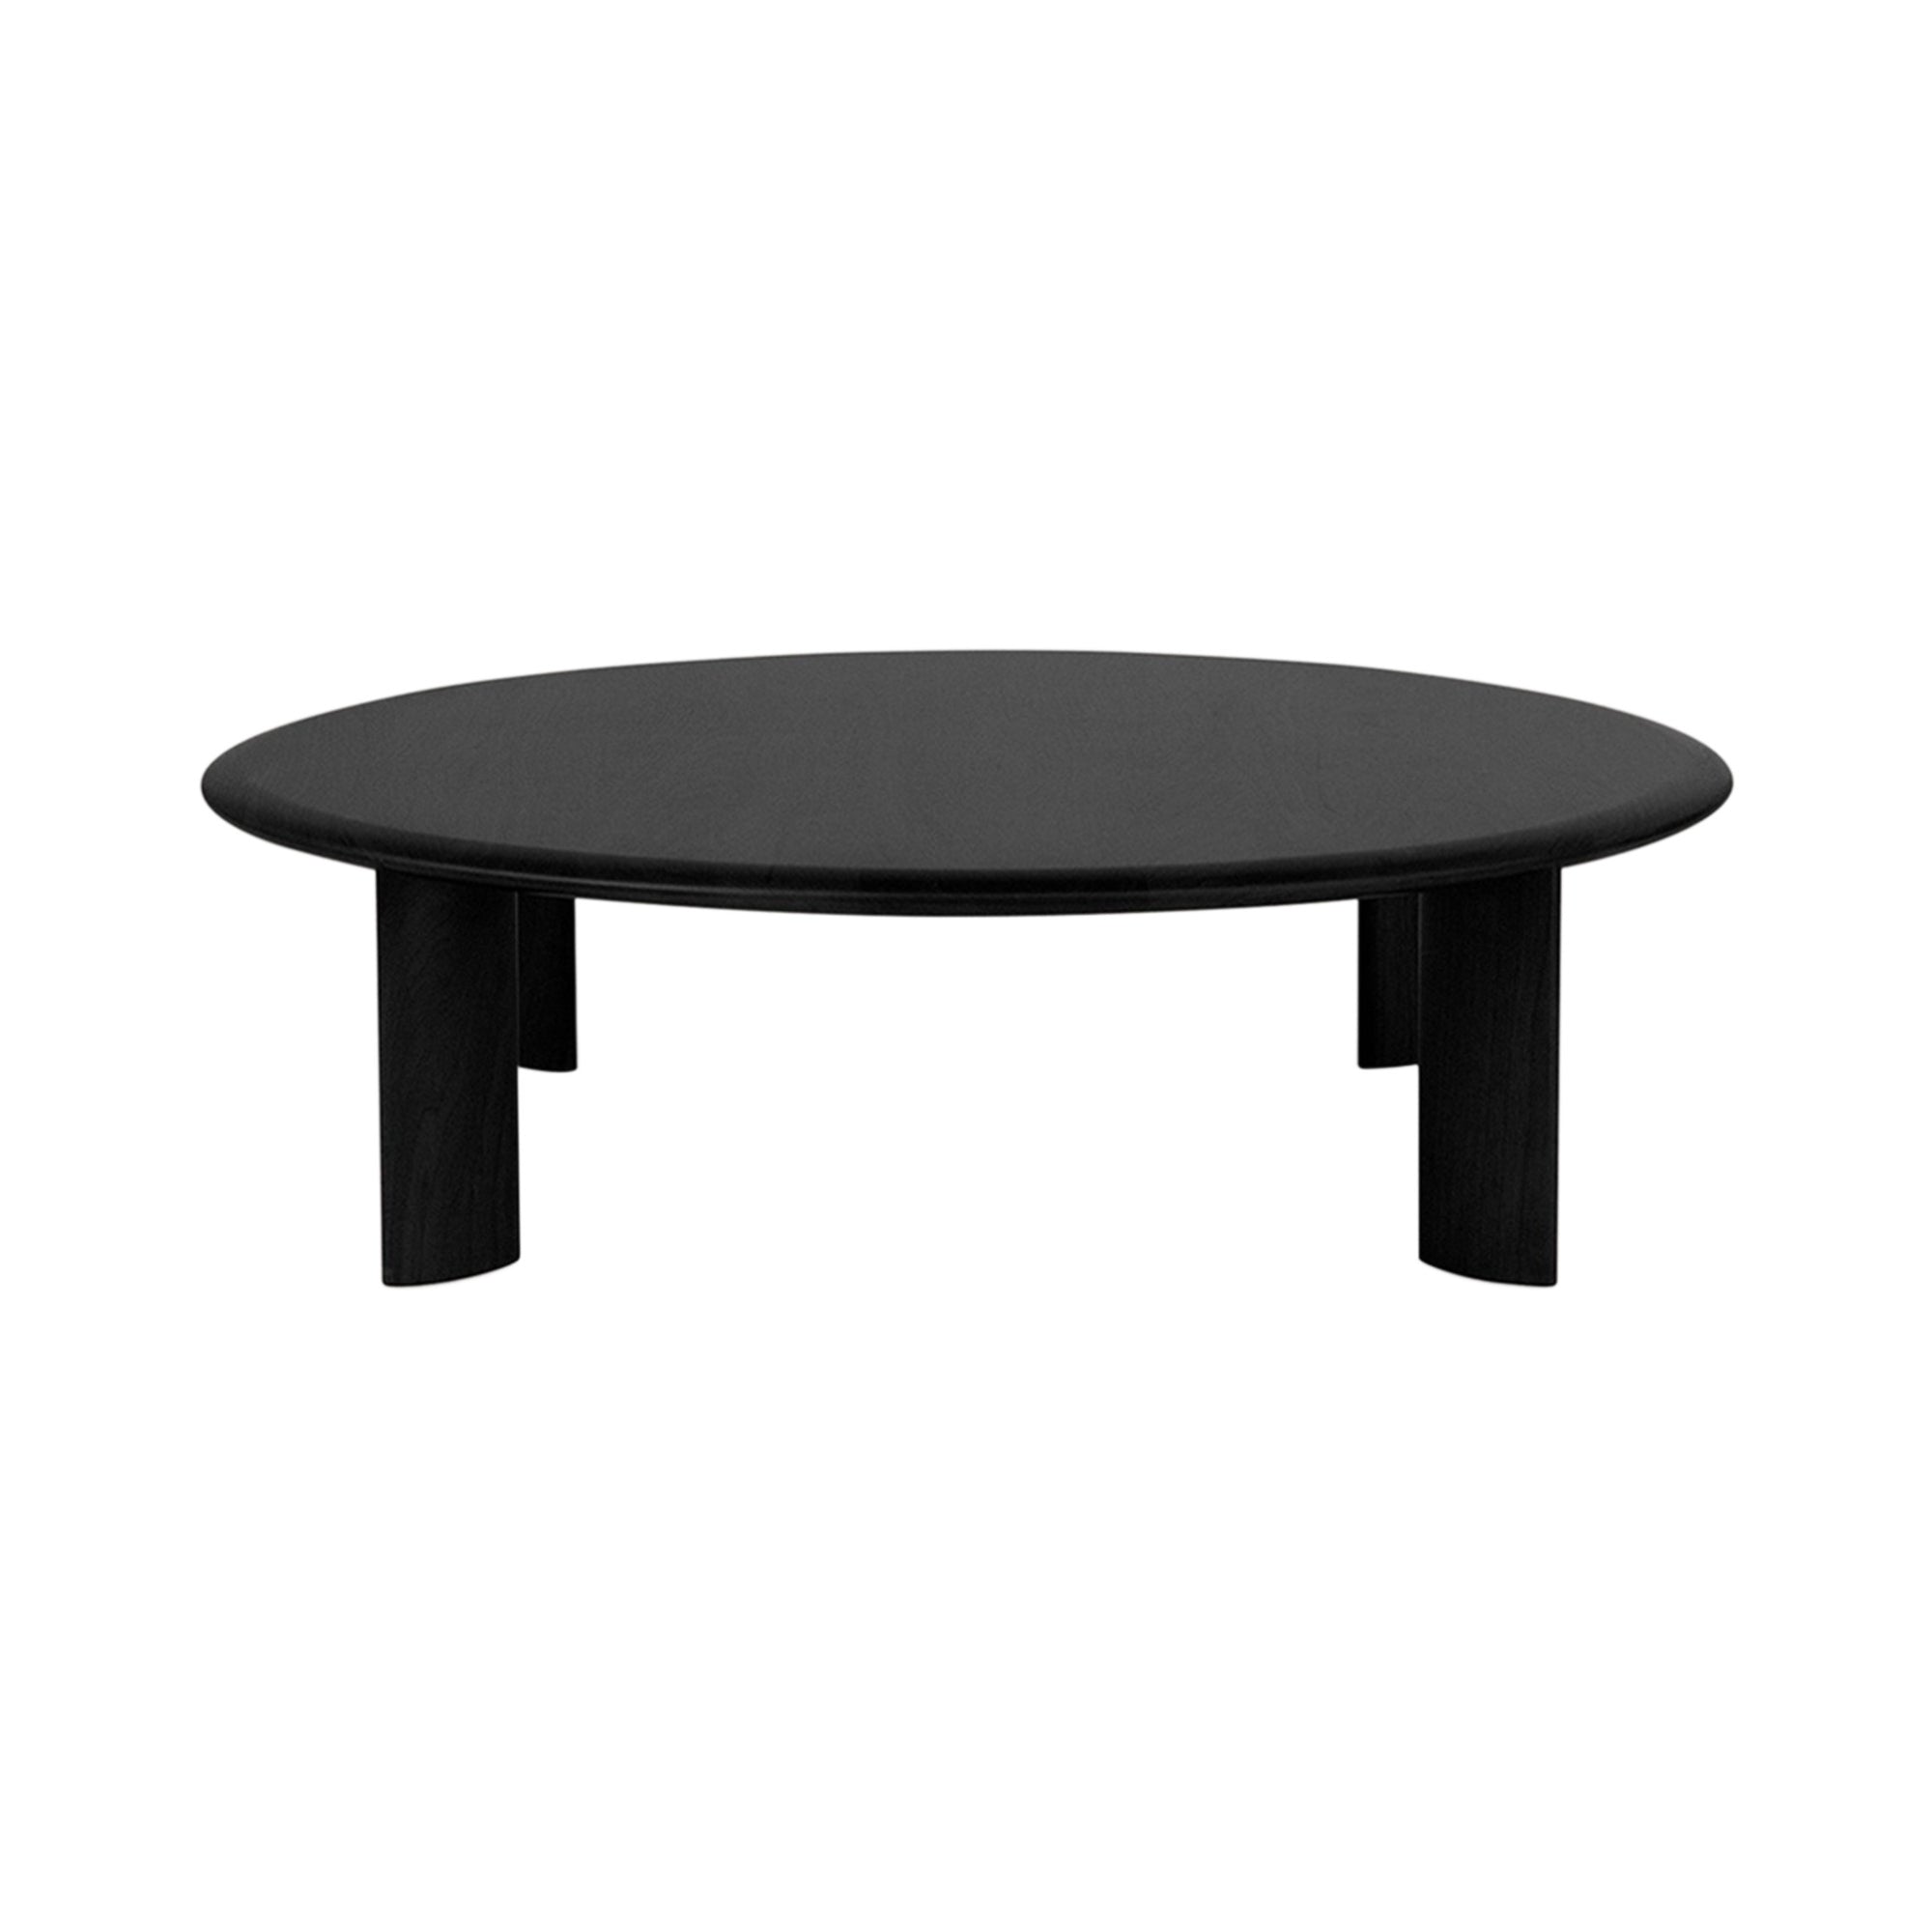 IO Coffee Table: Large + Black